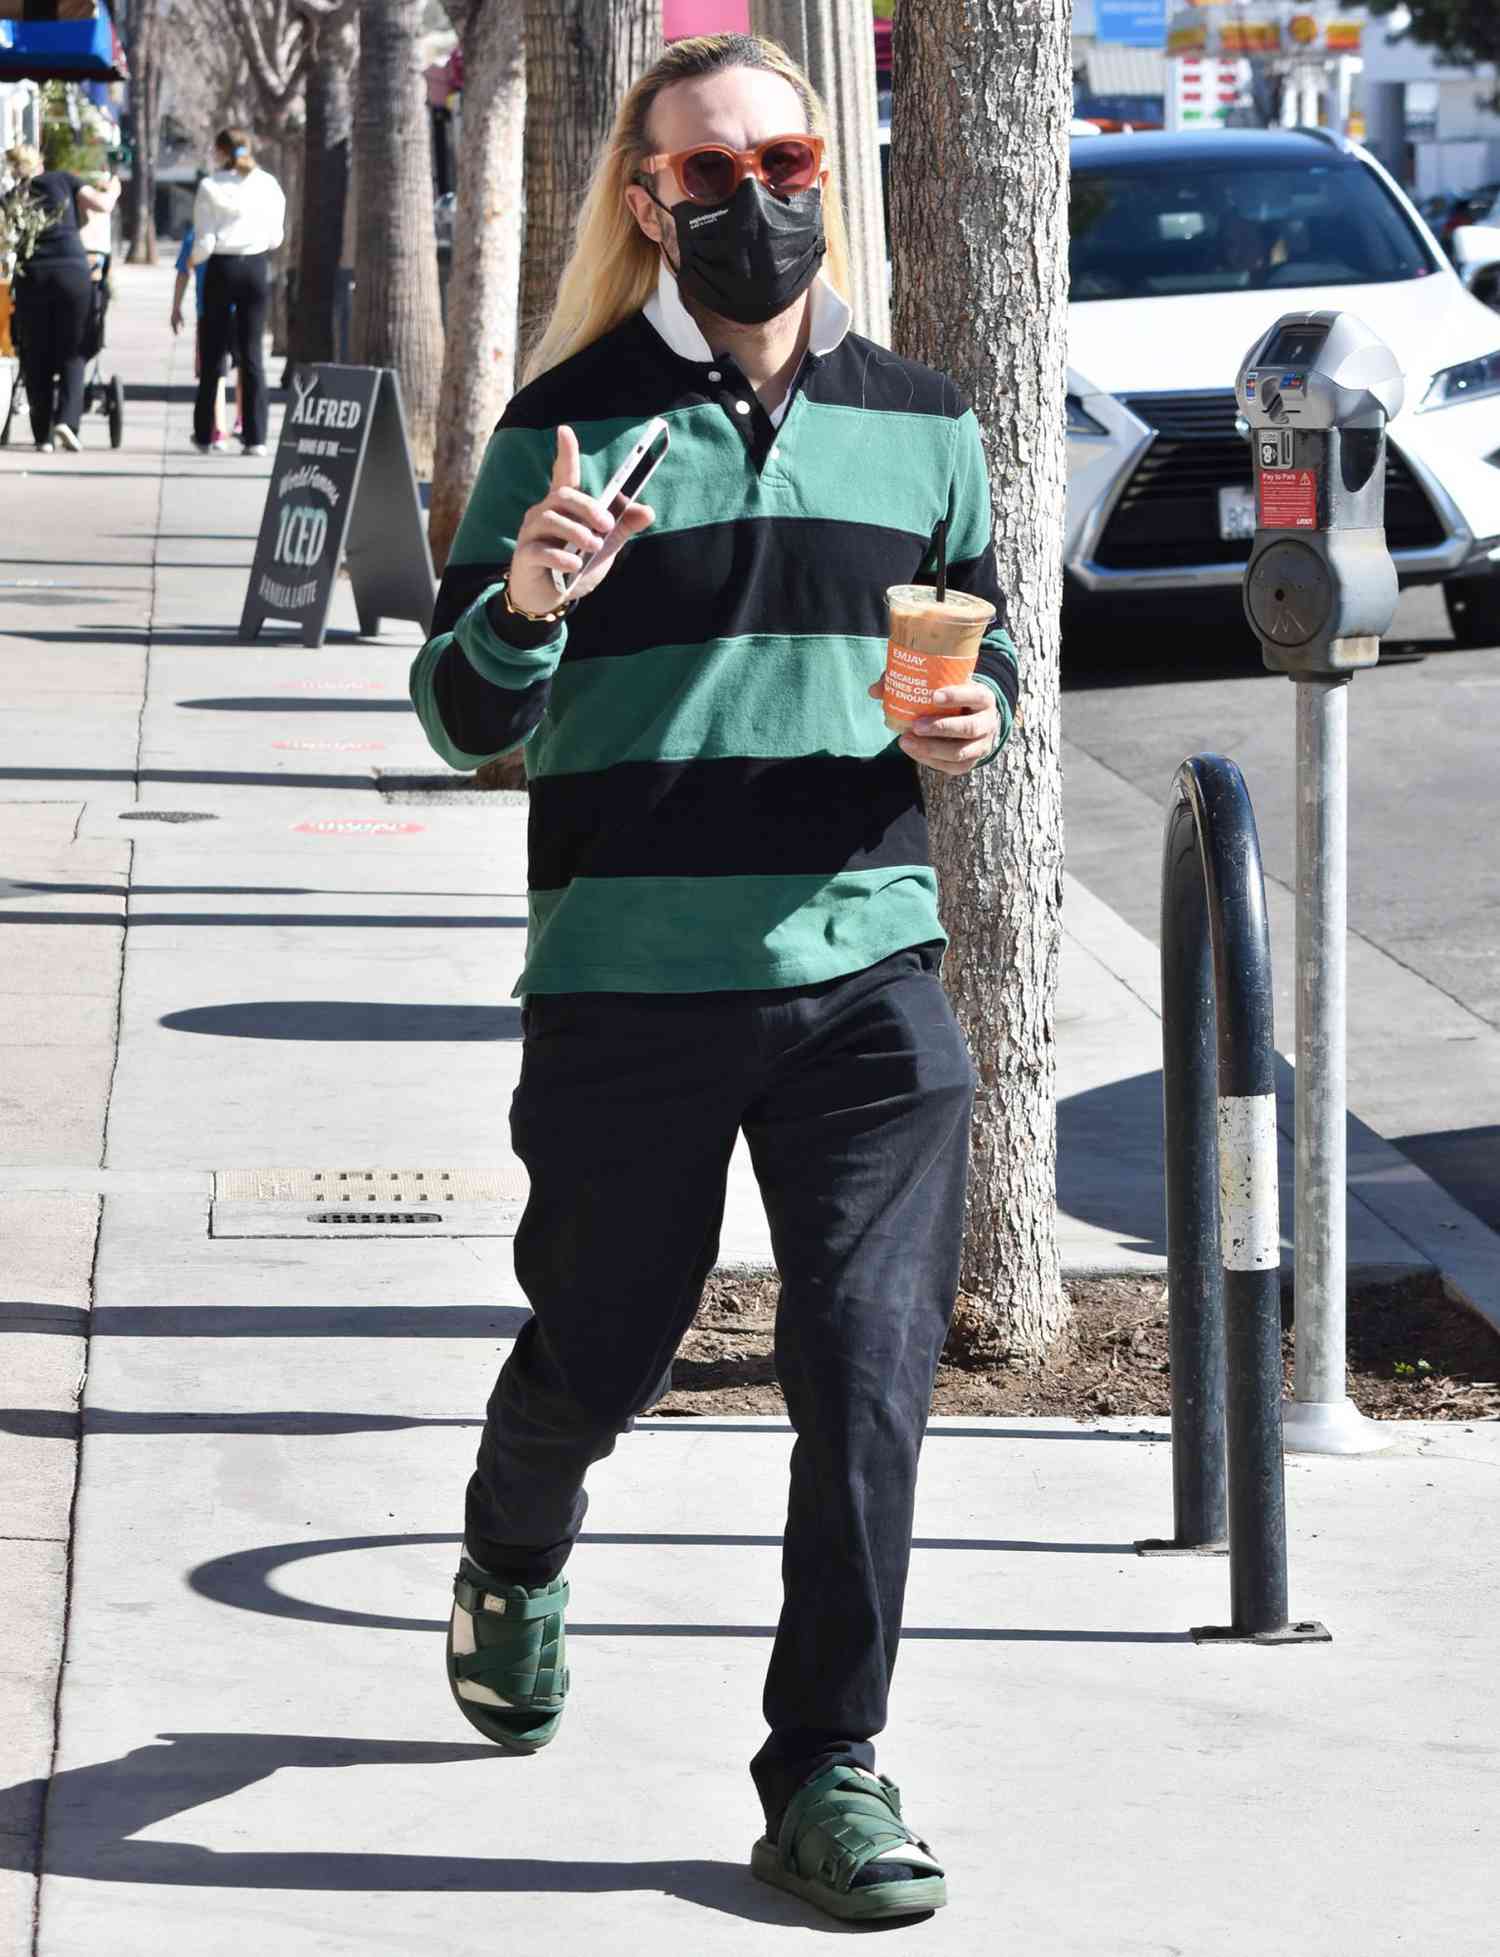 Pete Wentz is seen on February 22, 2021 in Los Angeles, California